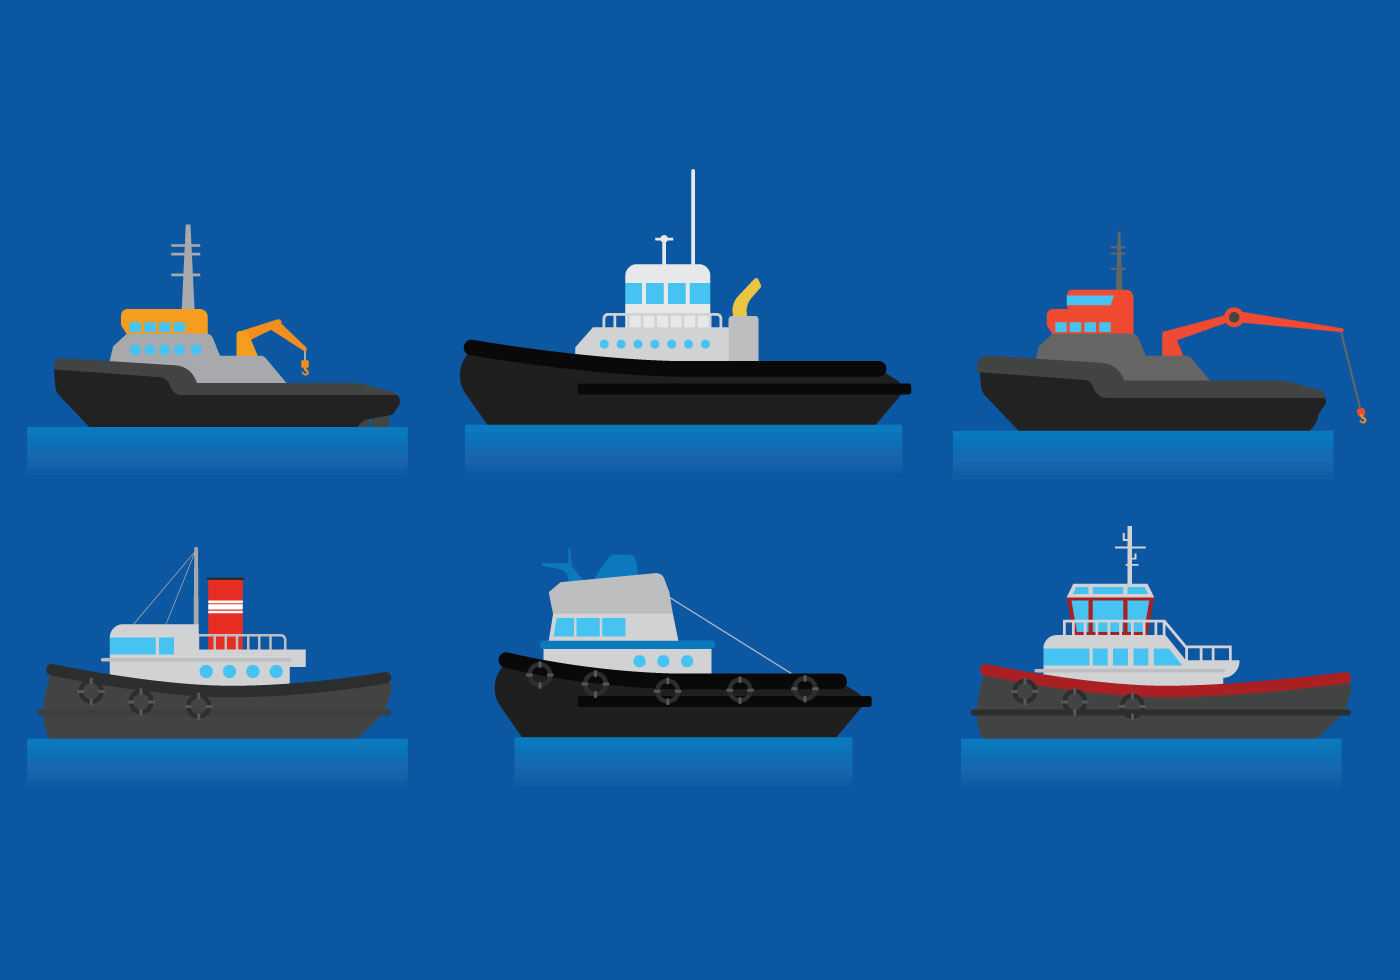 tug boat vector - download free vector art, stock graphics